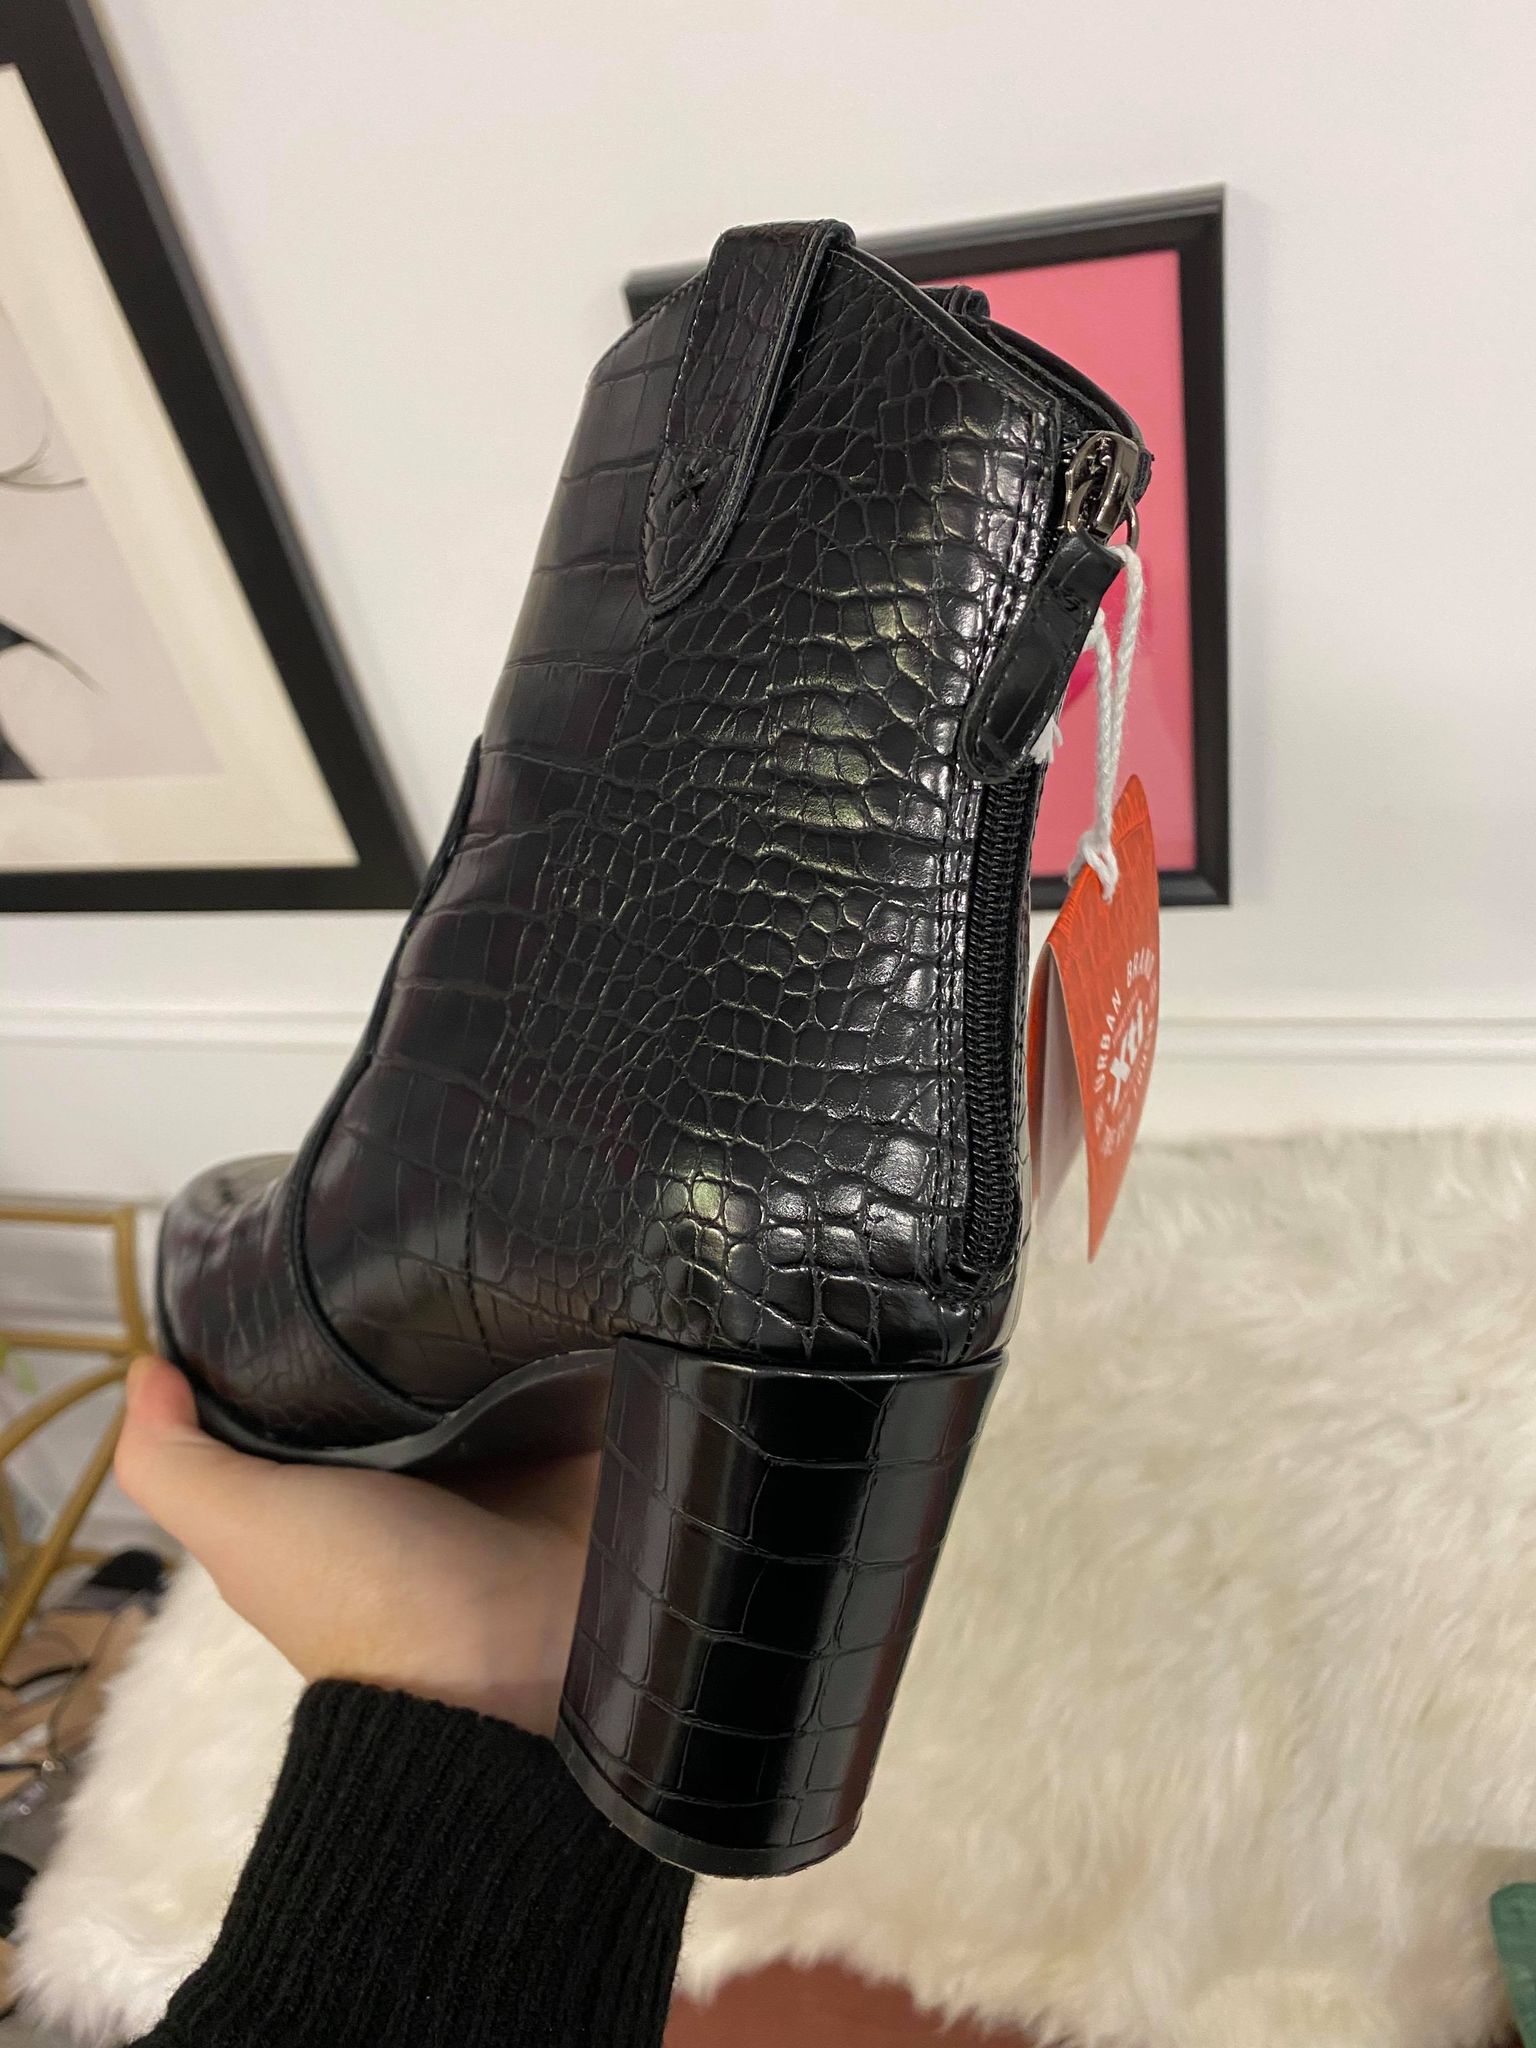 croc print ankle boots